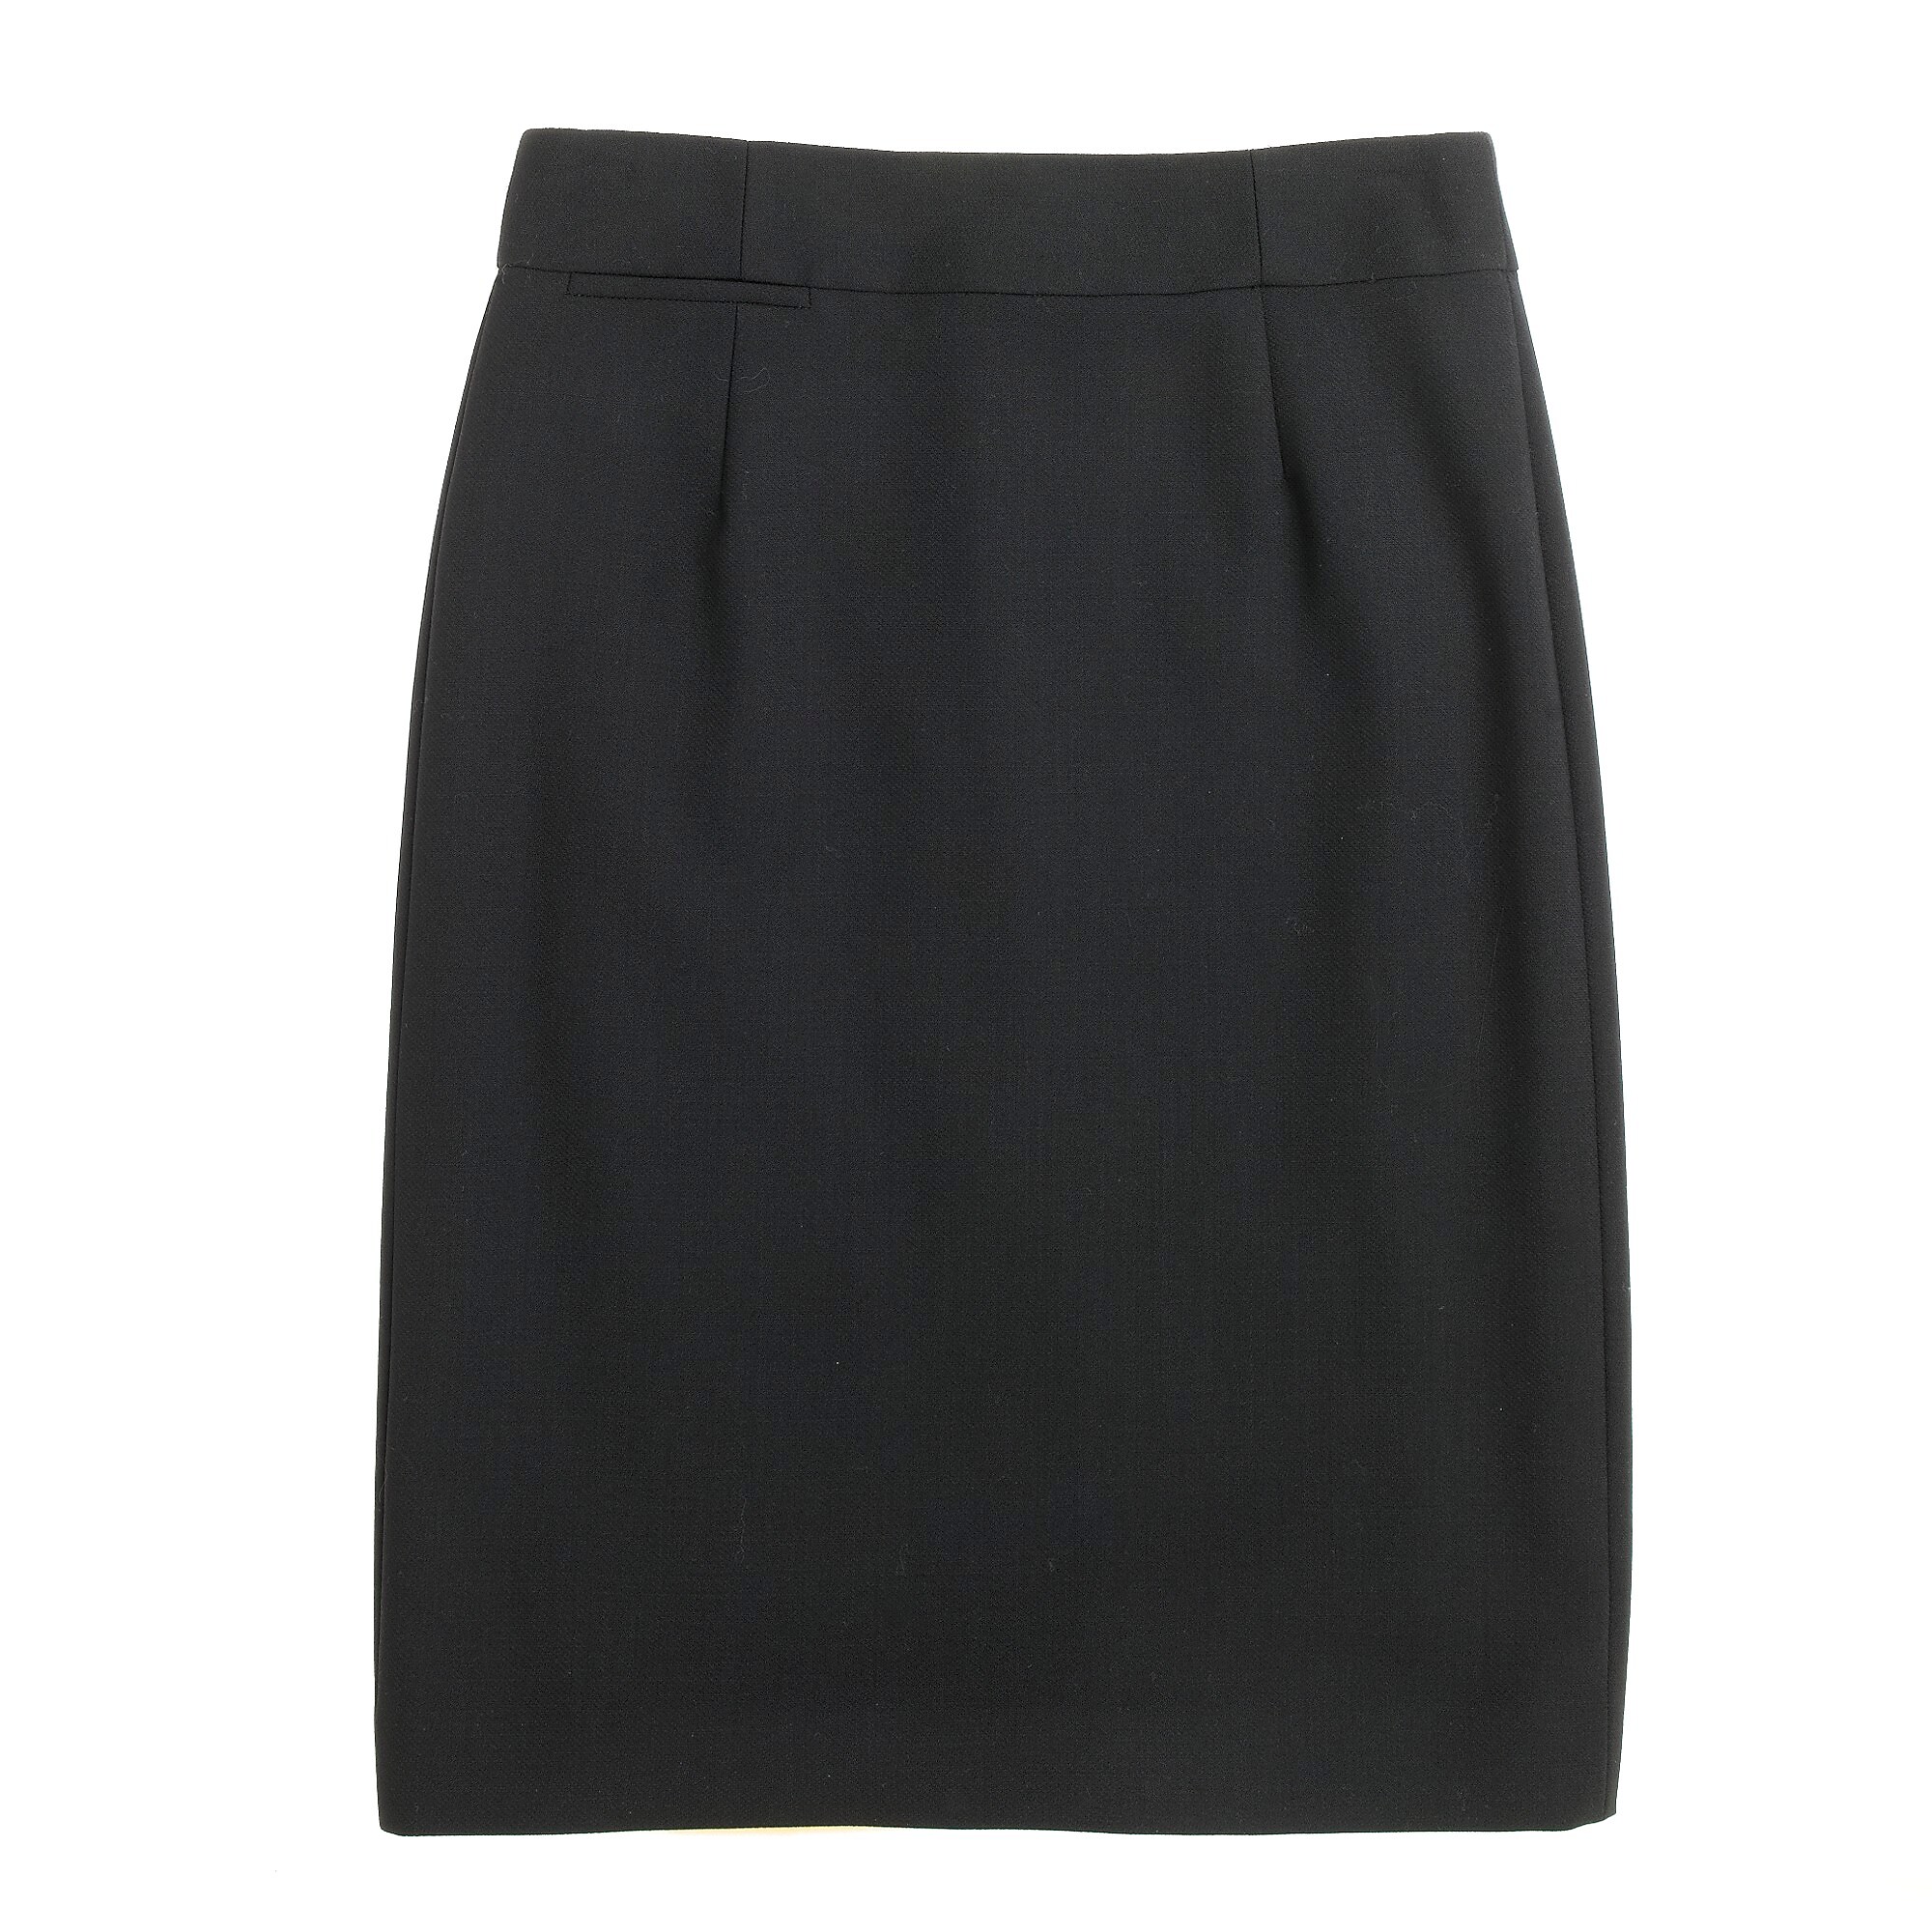 Pencil skirt in wool crepe : Women pencil | J.Crew